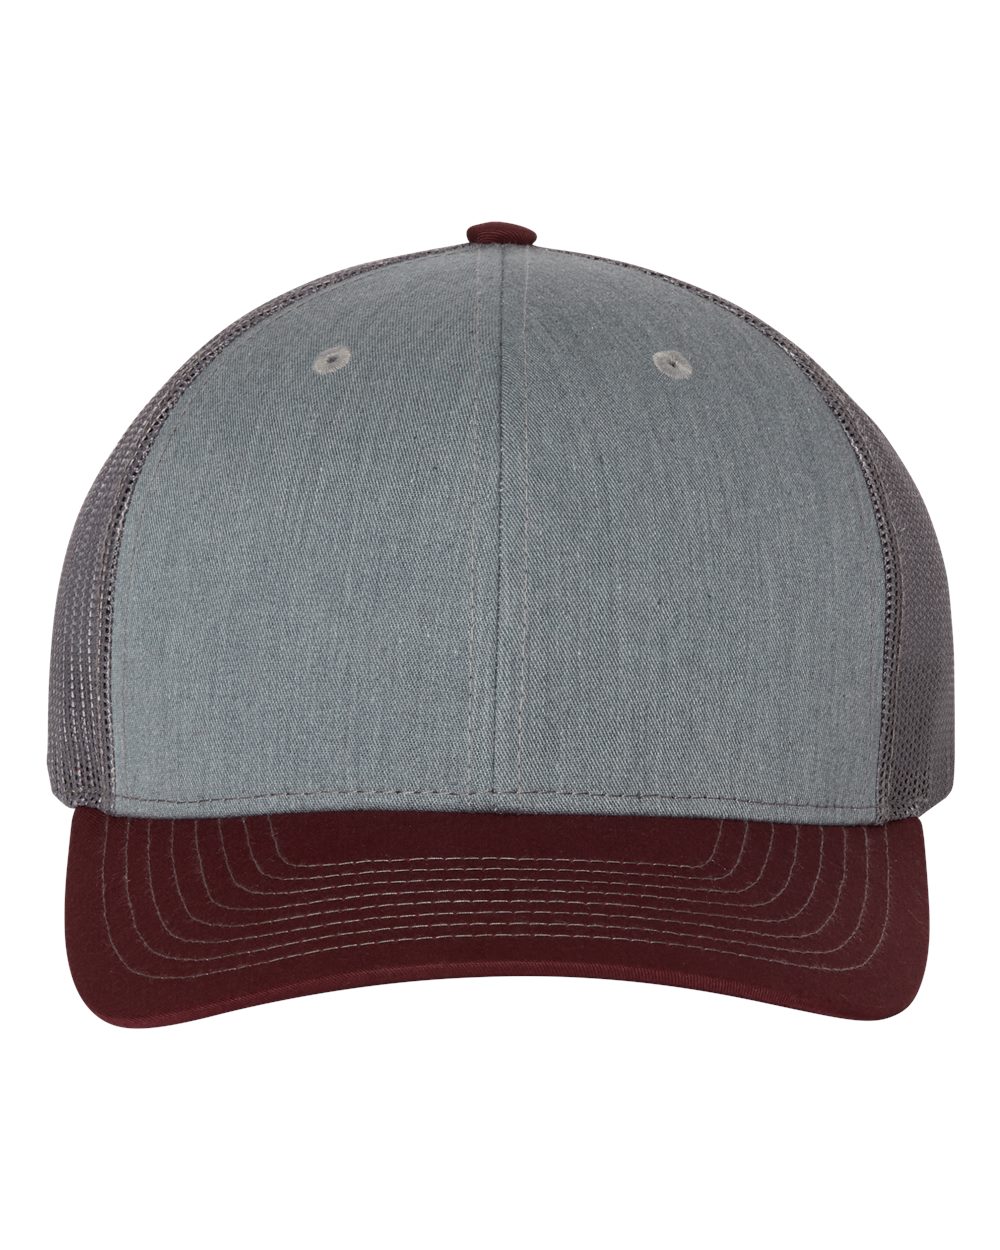 Richardson Snapback Trucker Hat (112) in Heather Grey/Charcoal/Maroon